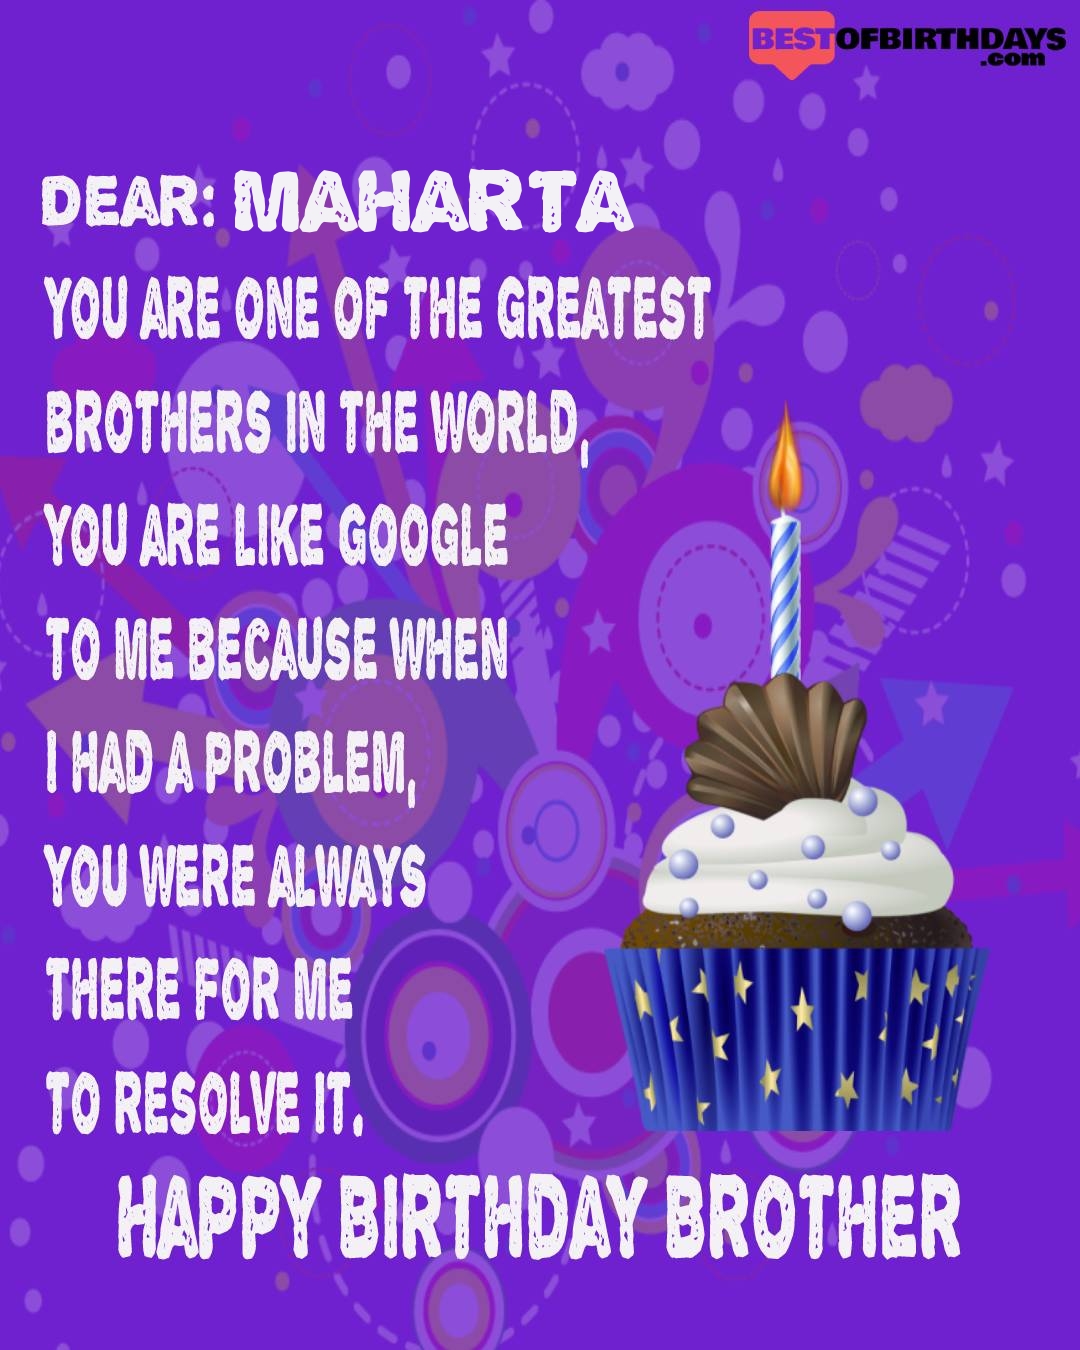 Happy birthday maharta bhai brother bro